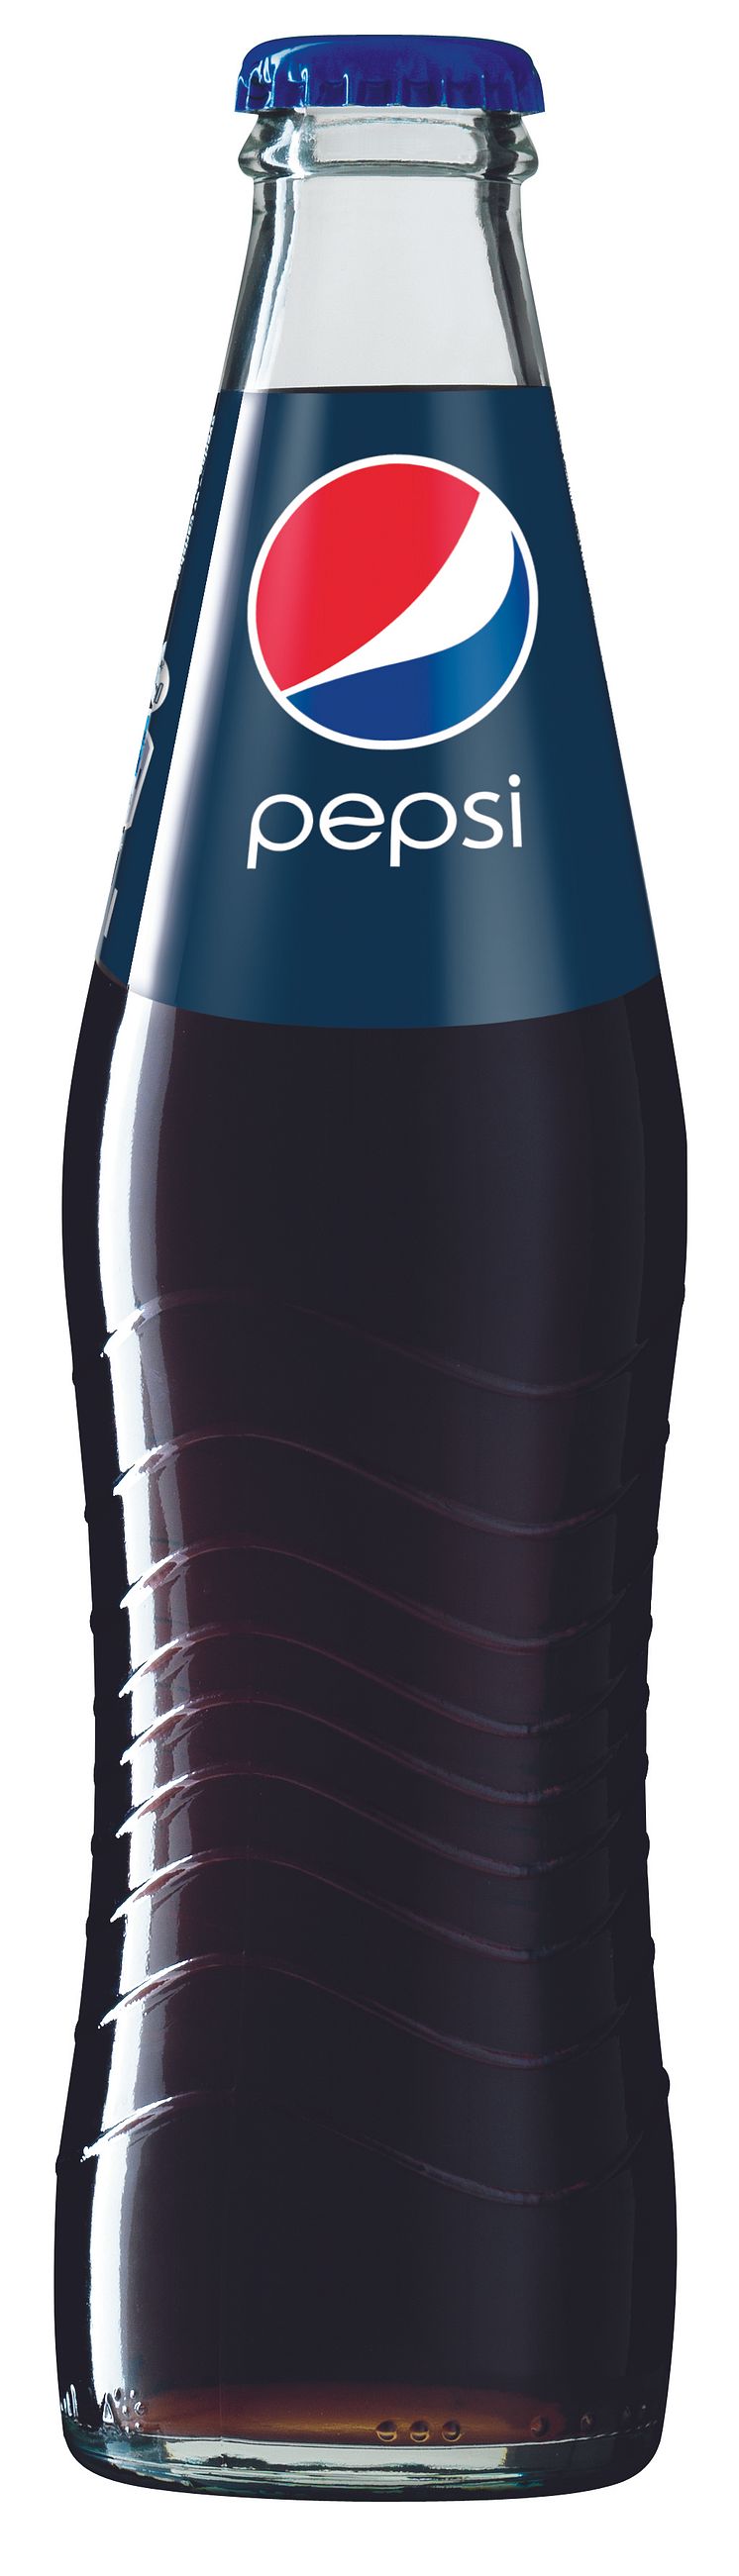 Pepsi glasflaska